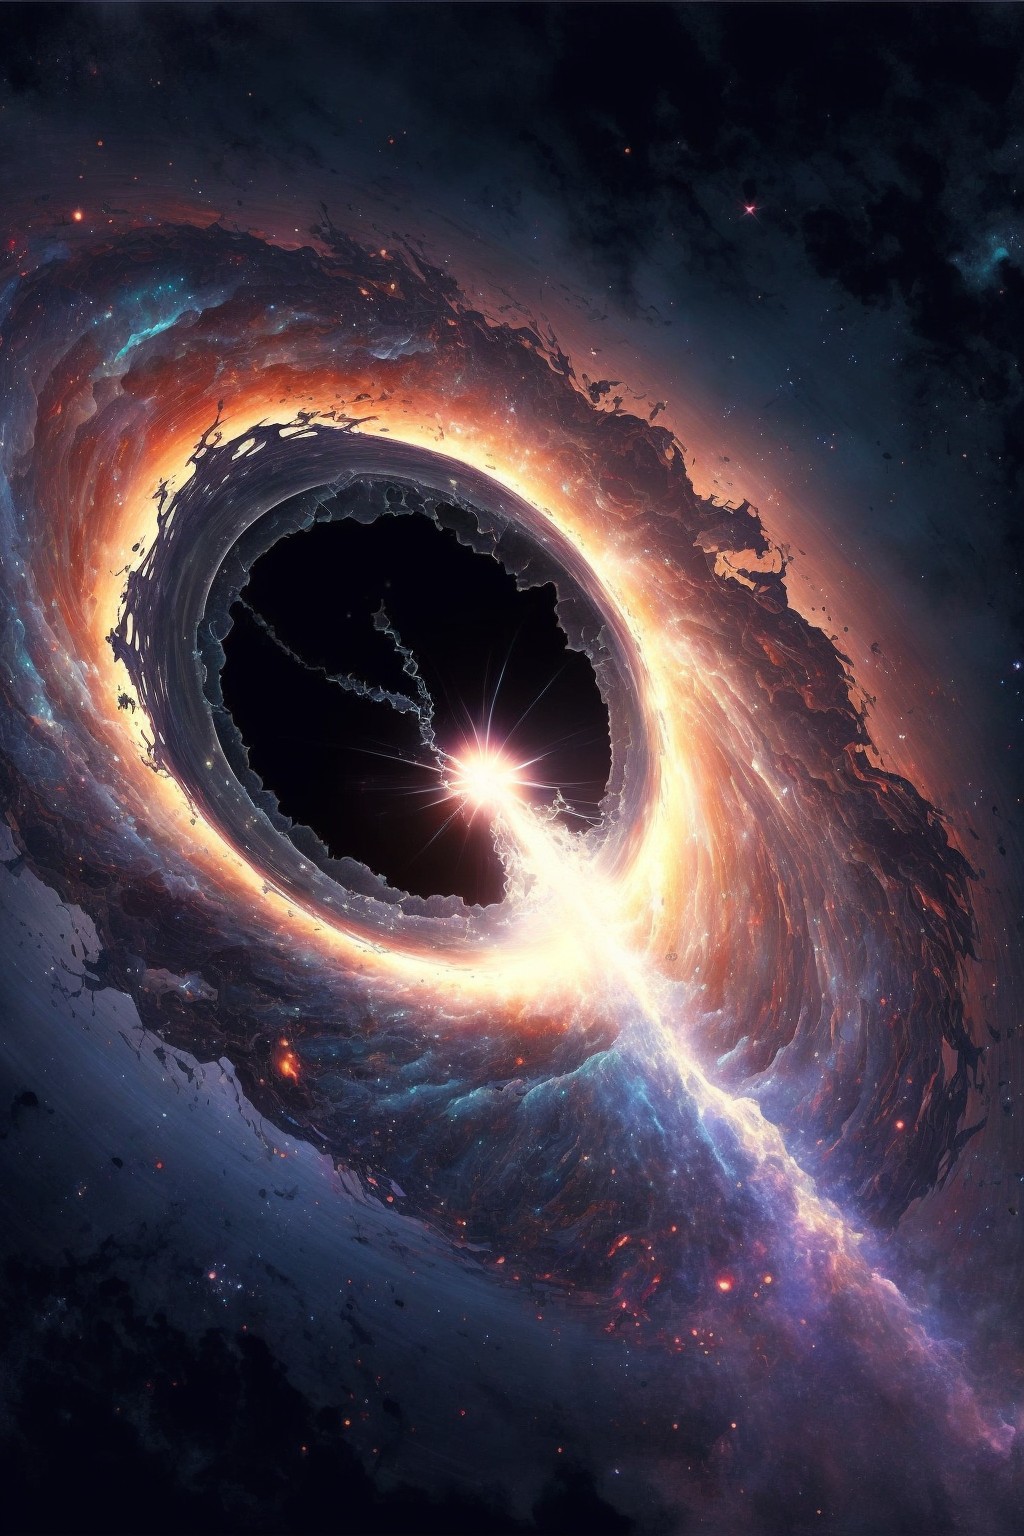 A black hole devours a star